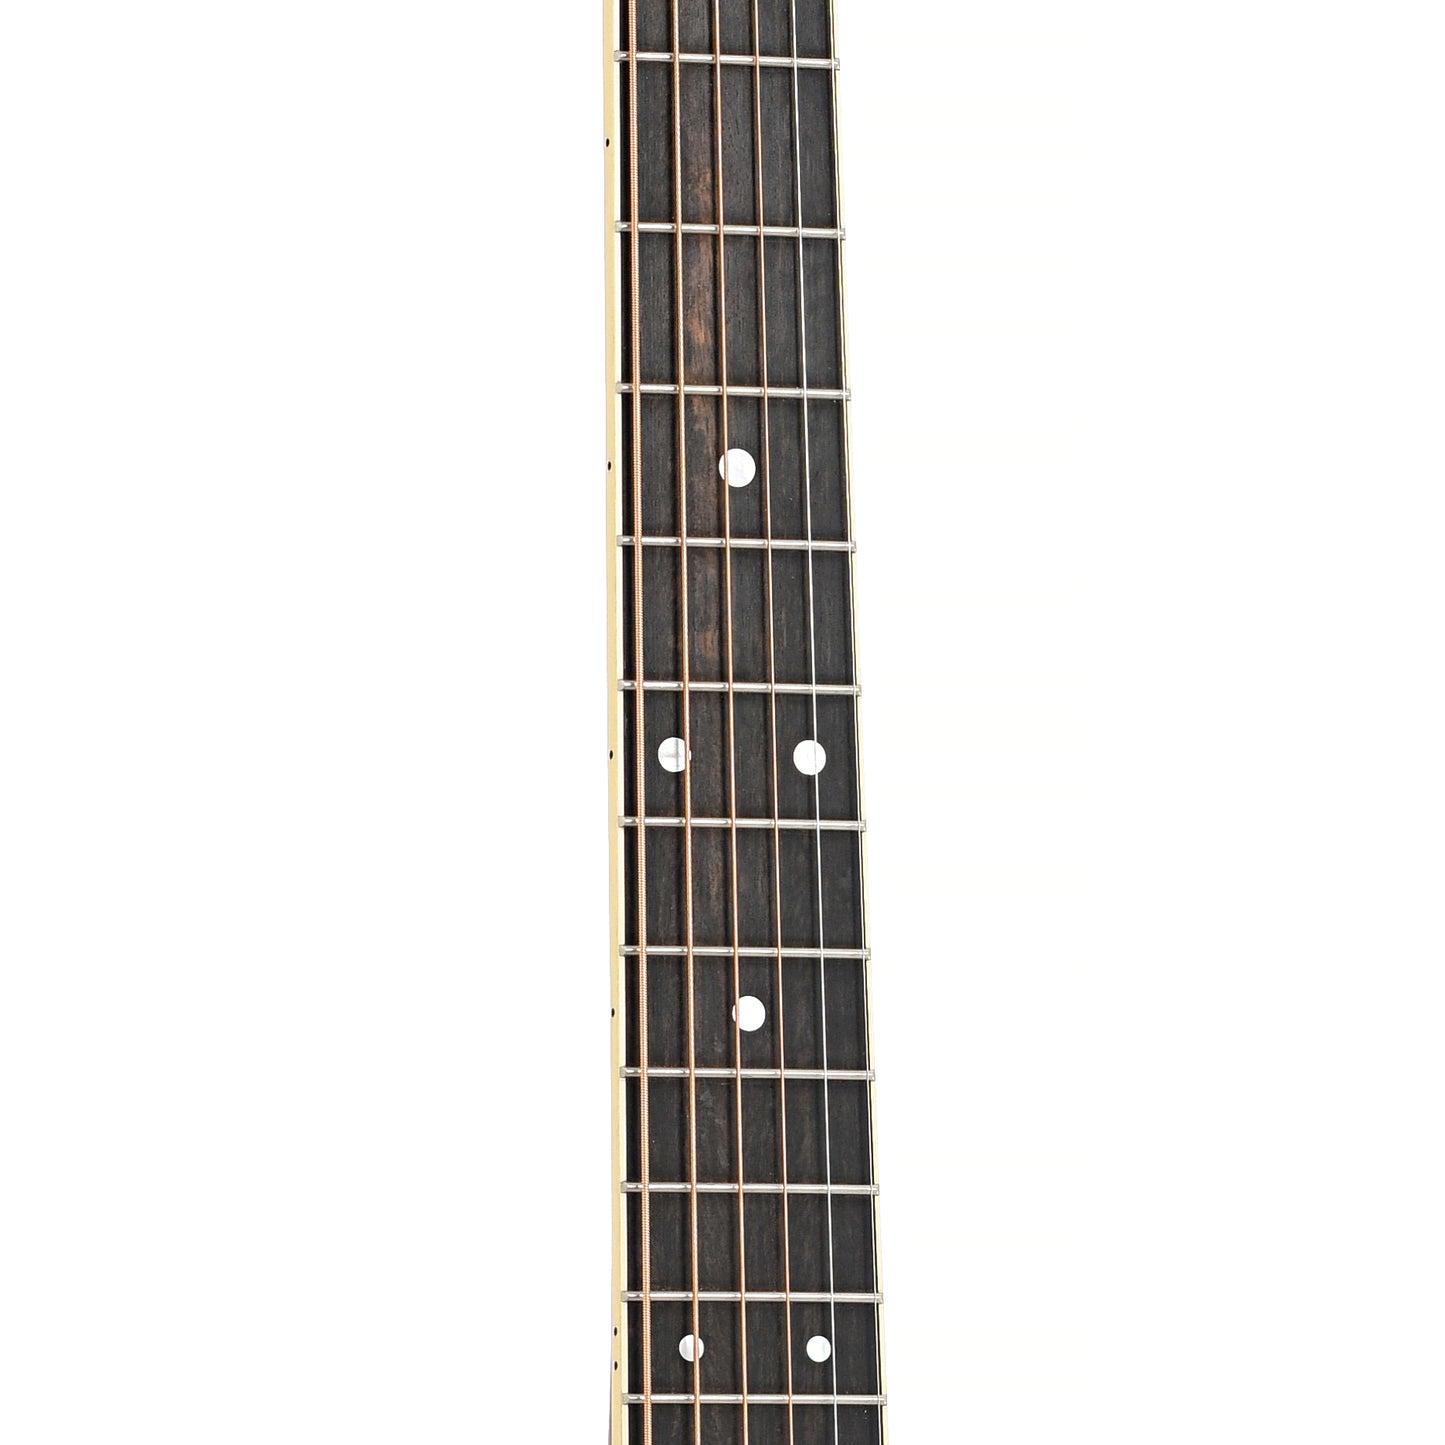 Fretboard of Martin D-35 Guitar